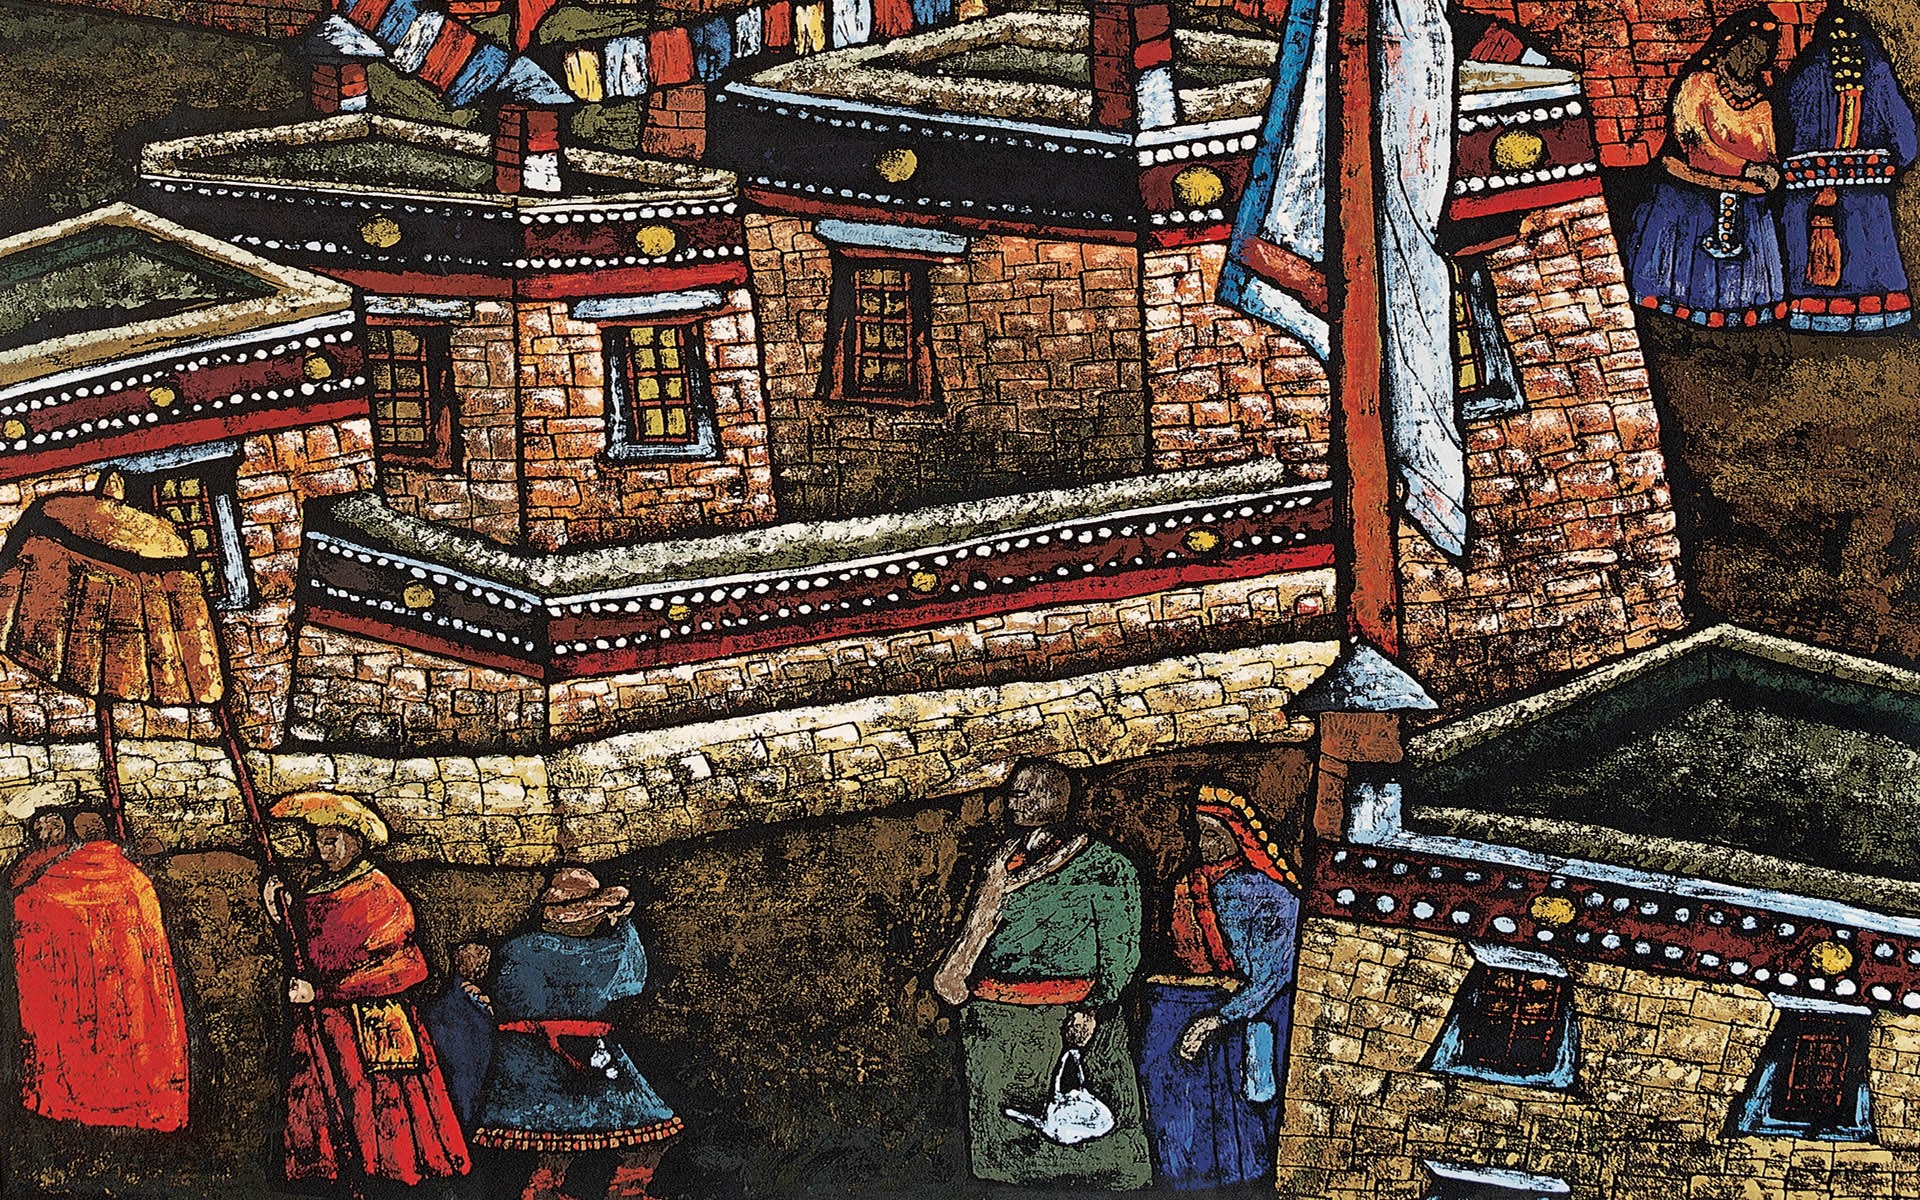 Cheung Pakistan fond d'écran d'impression du Tibet (1) #19 - 1920x1200